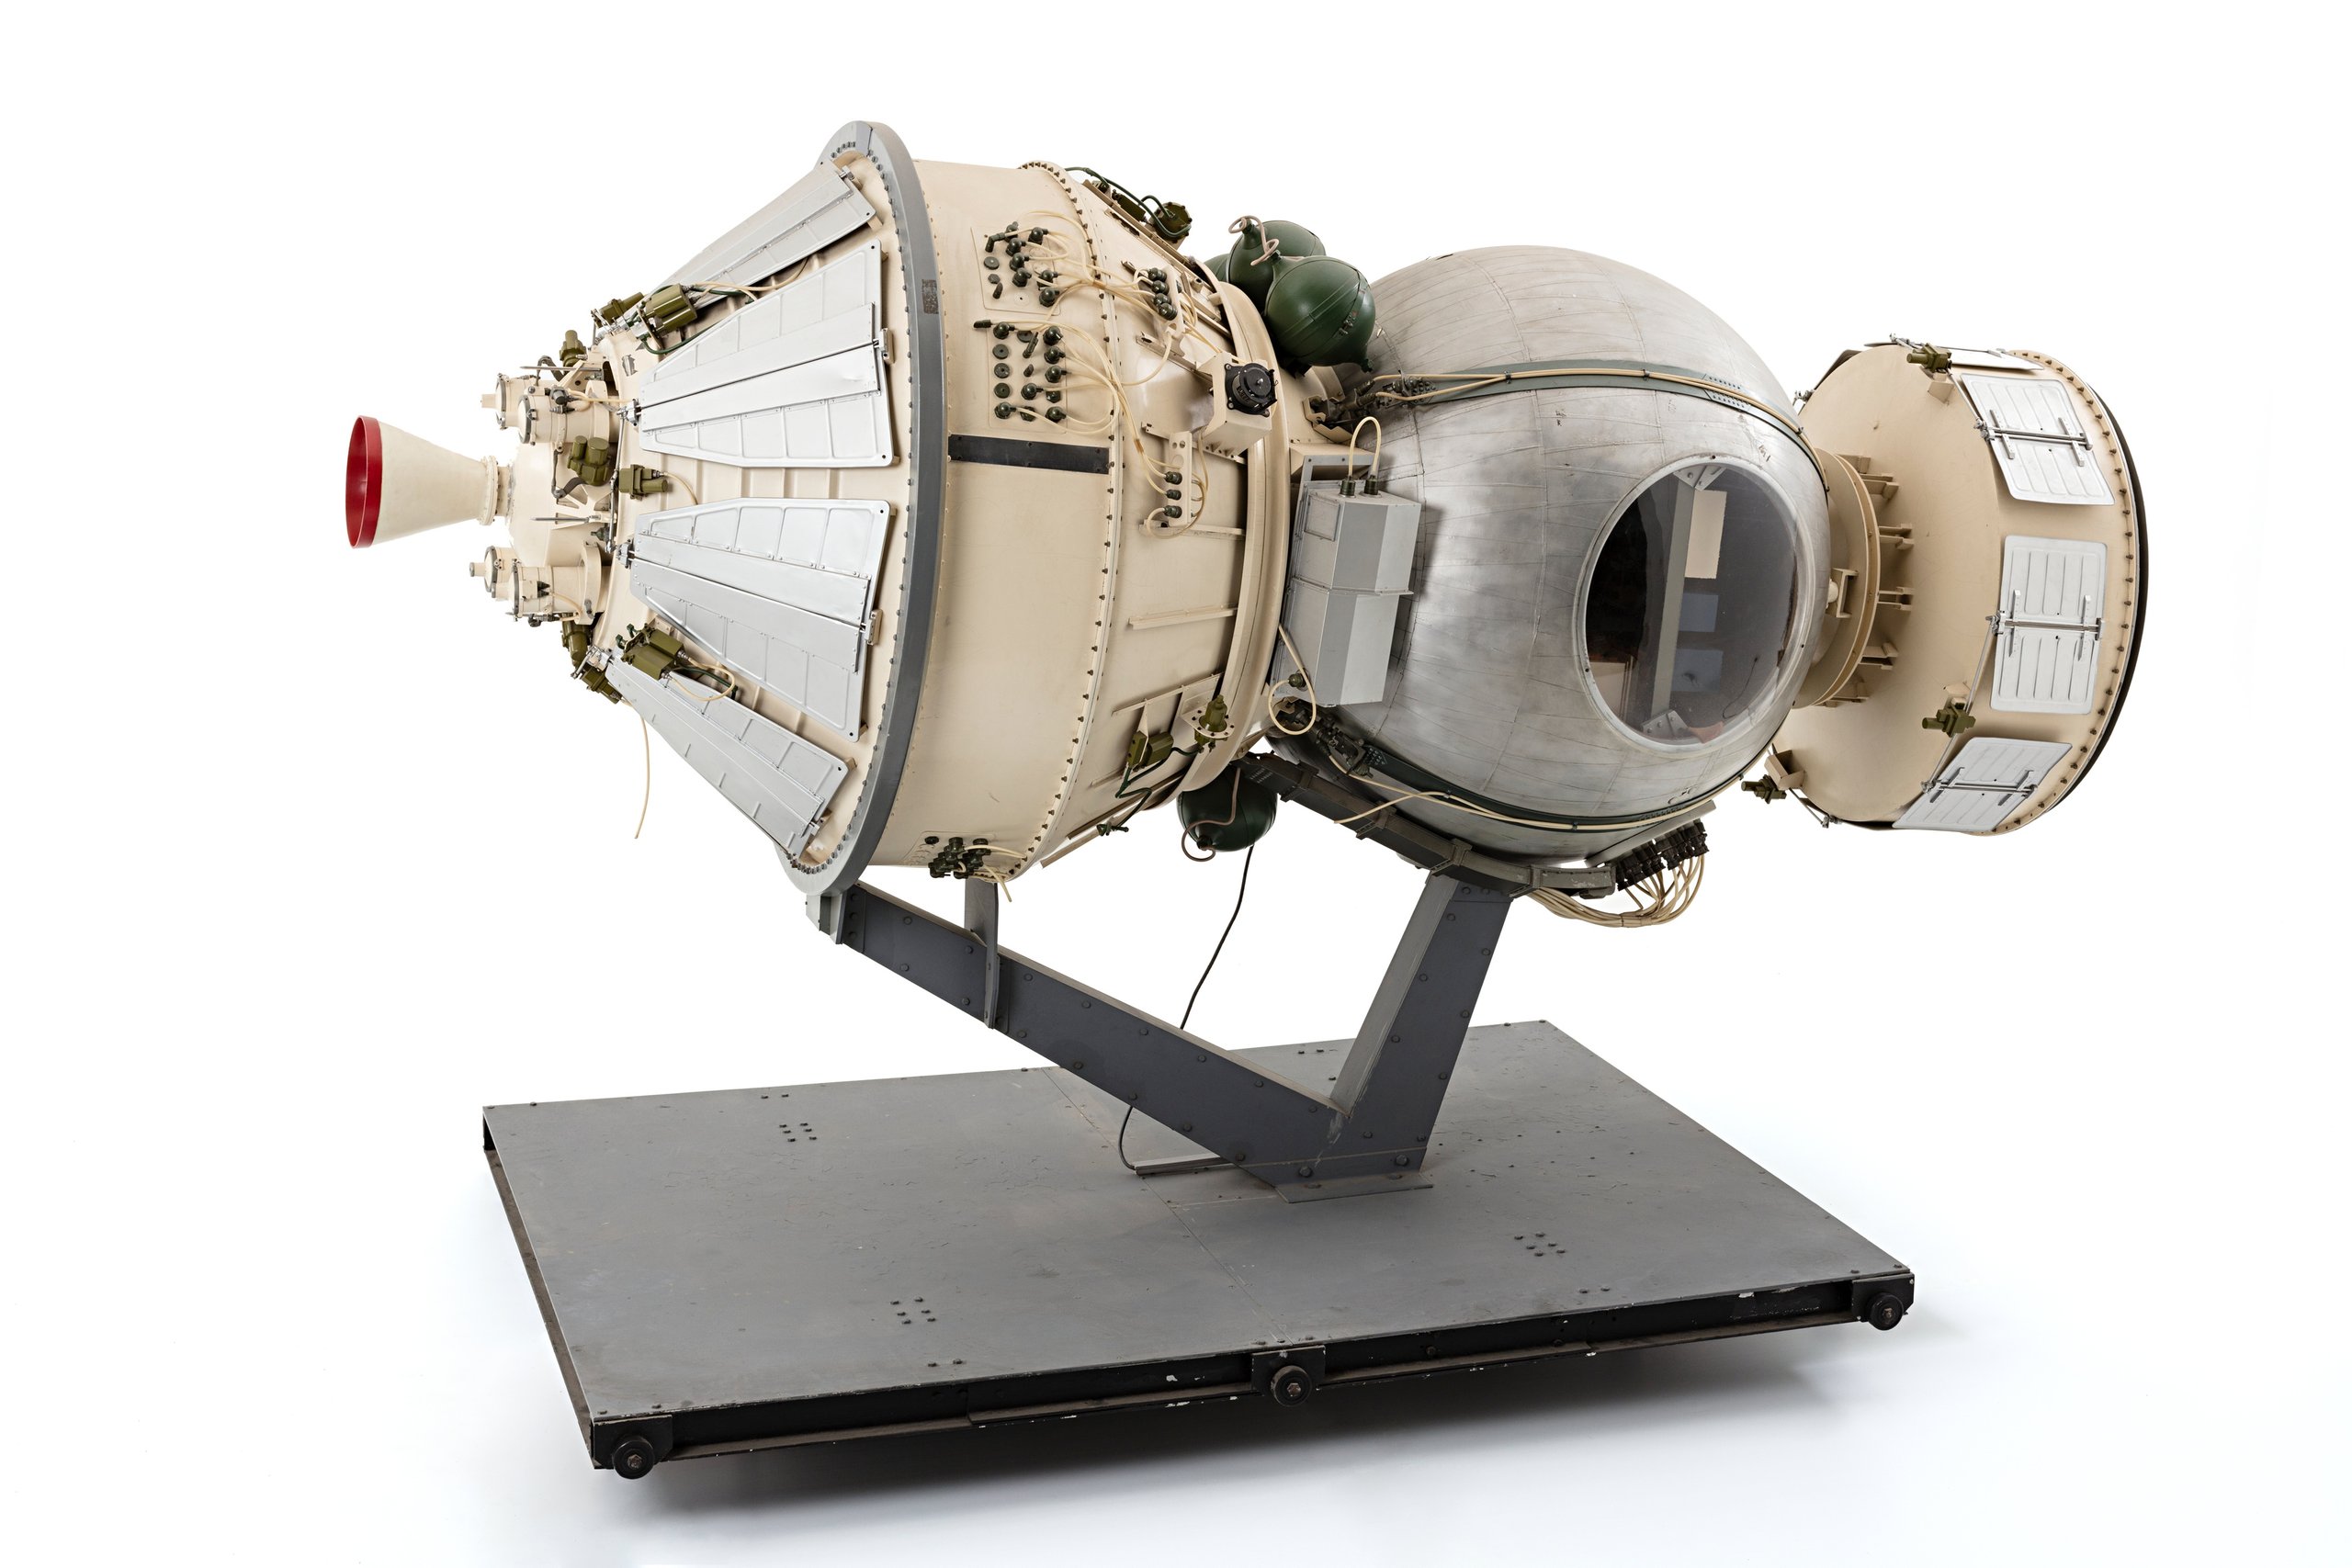 Replica Cosmos-782 (Bion-3) satellite